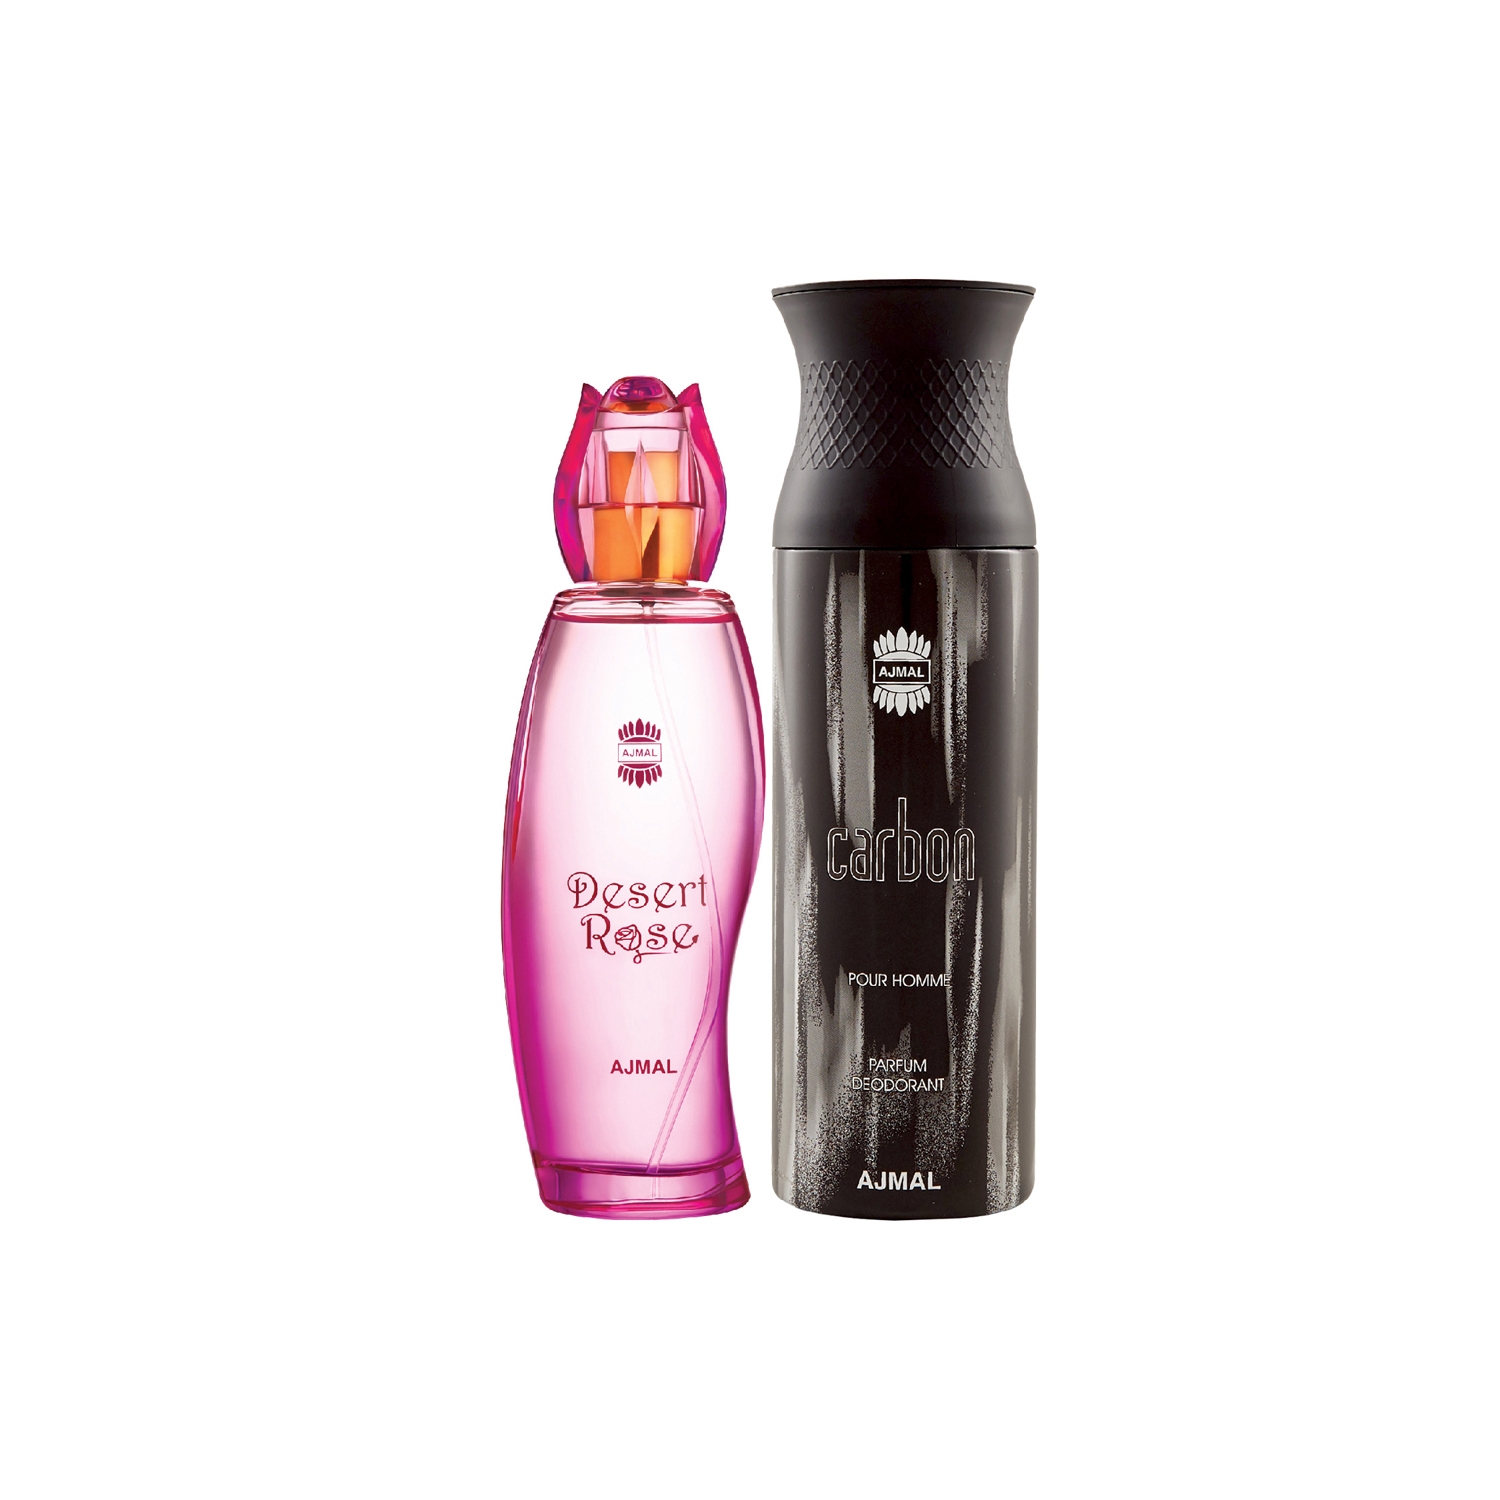 Ajmal | Ajmal  Desert Rose EDP Floral Oriental Perfume 100ml for Women and Carbon Homme Deodorant Citrus Spicy Fragrance 200ml for Men+ 2 Parfum Testers FREE